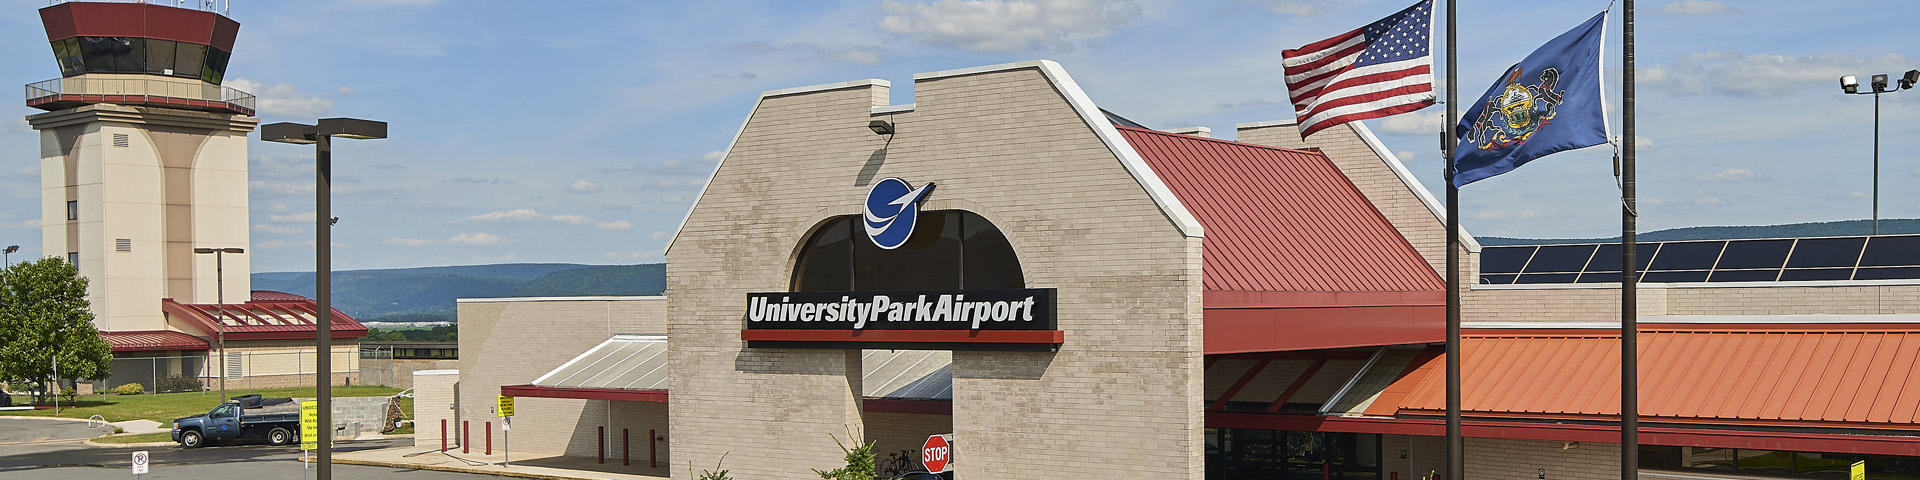 University Park Airport